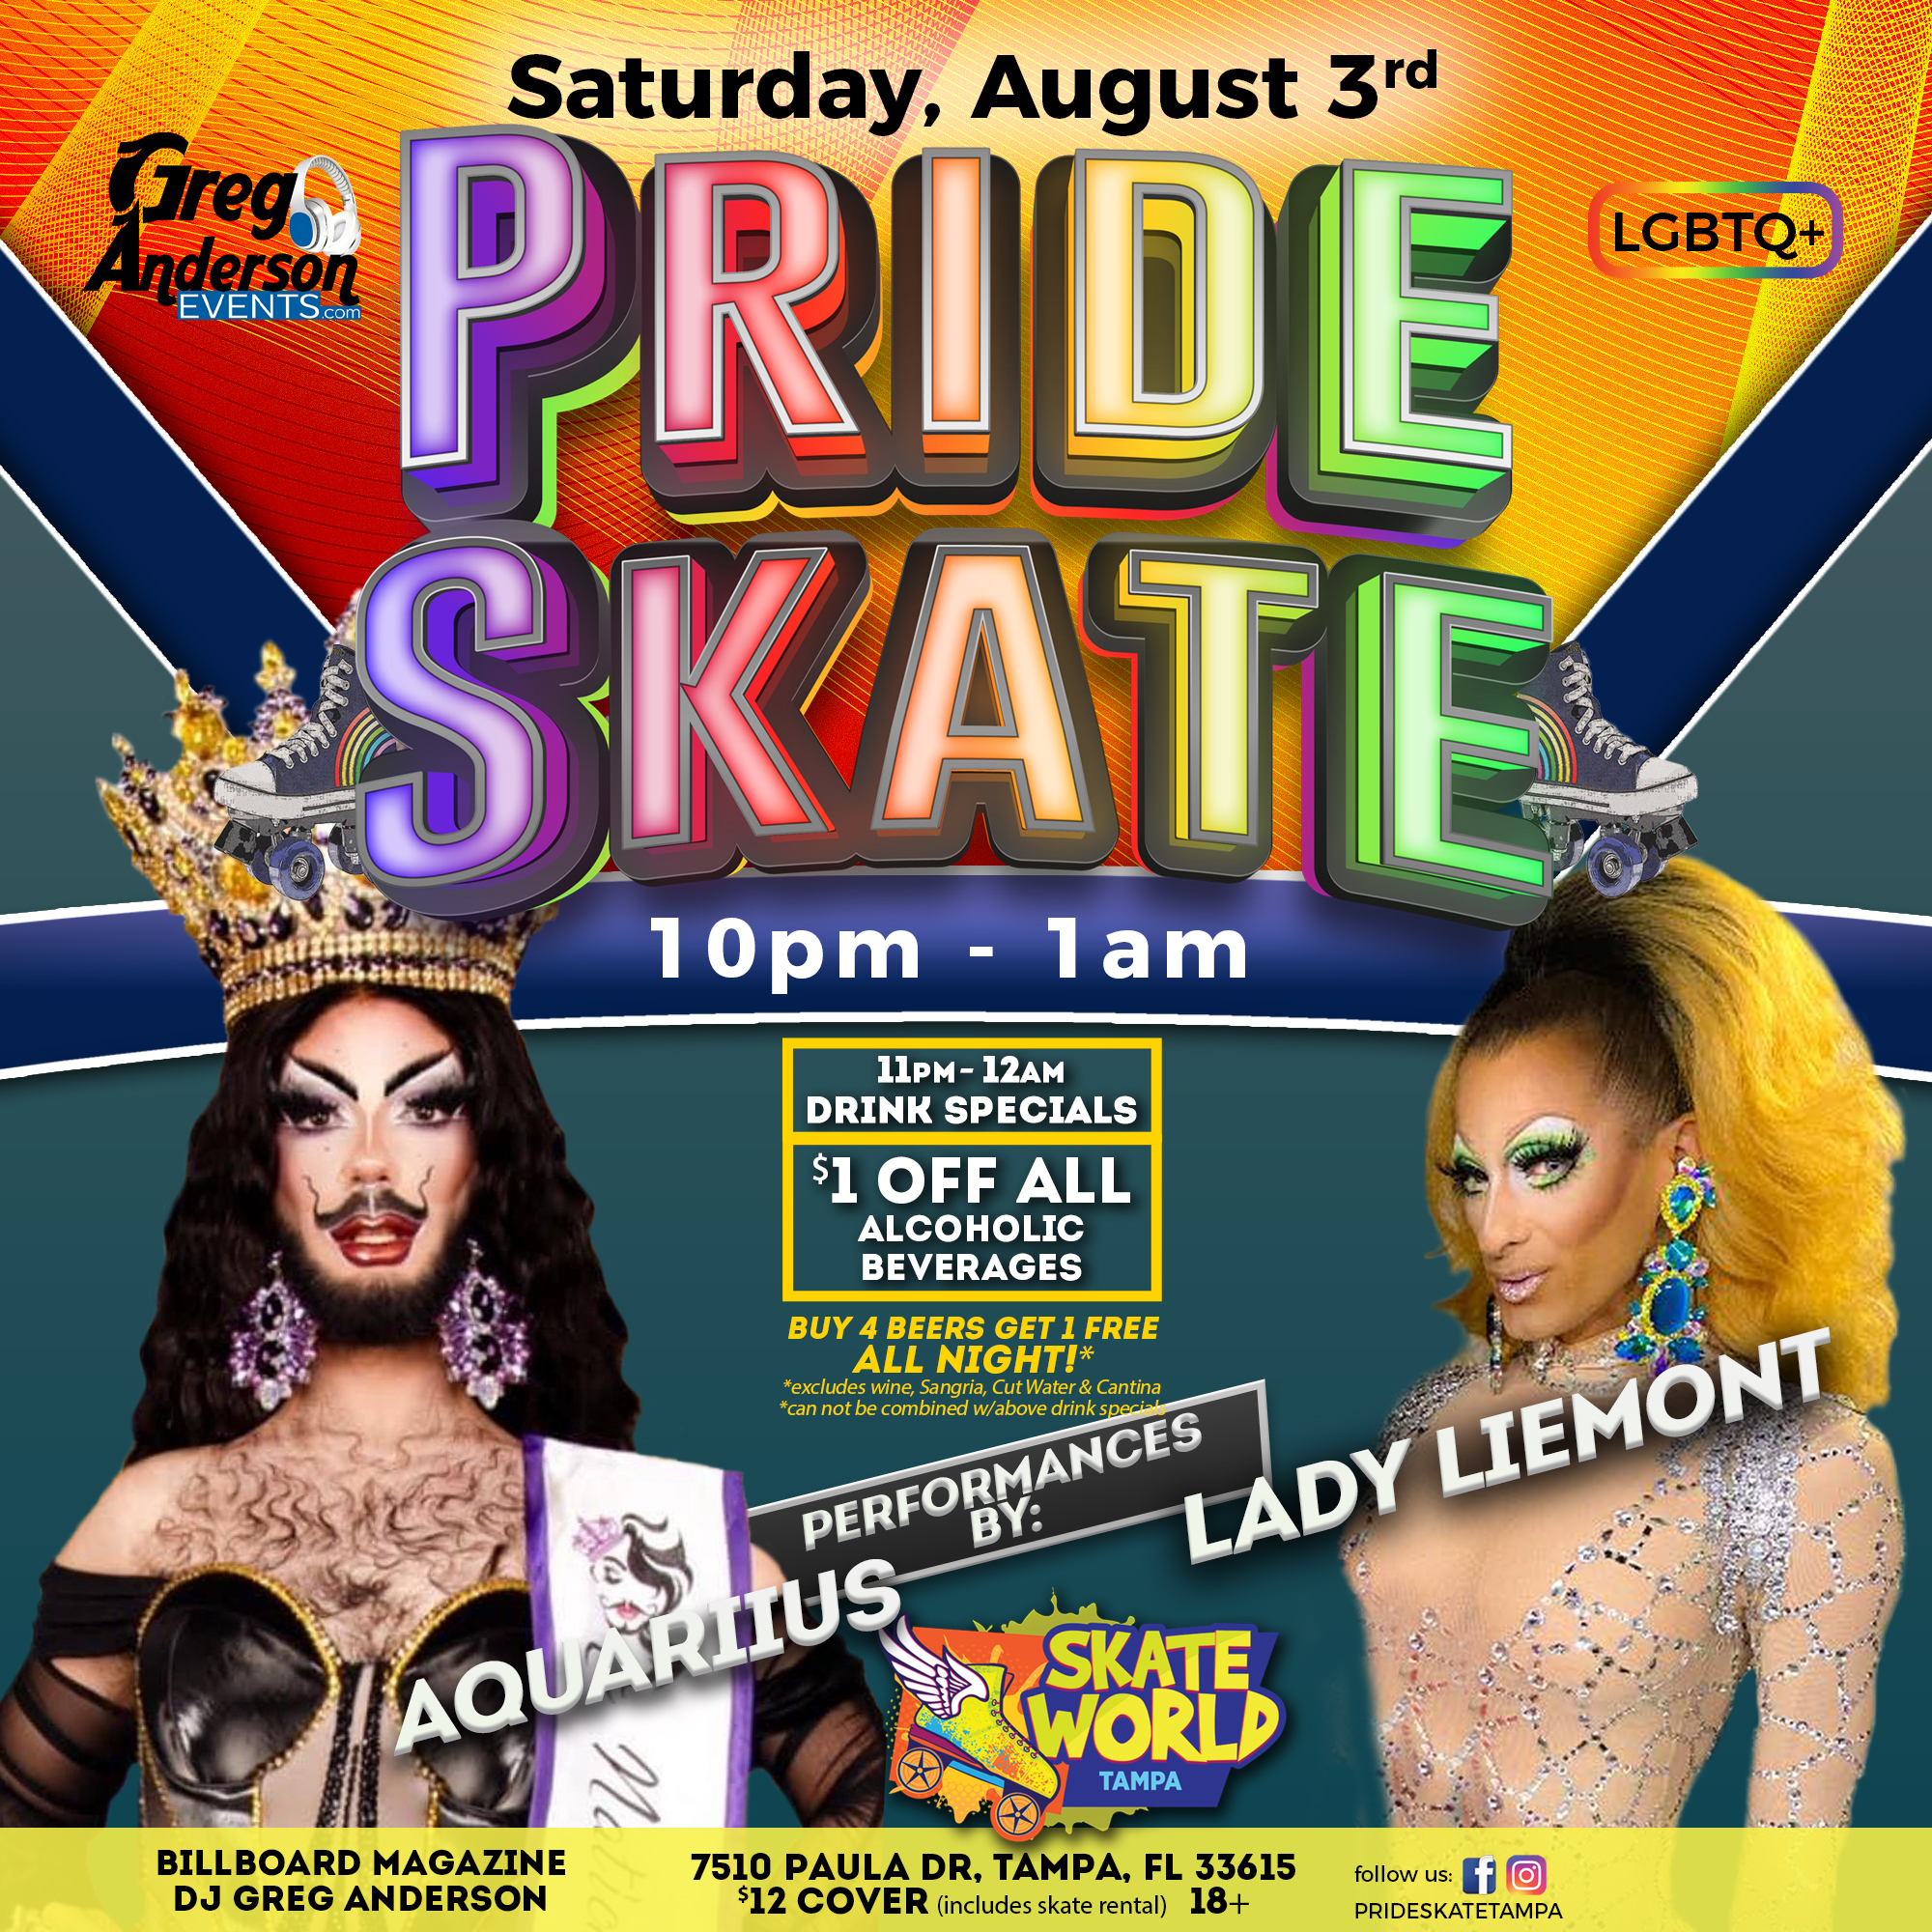 LGBTQ+ Friendly Pride Skate Night at Skateworld Tampa!